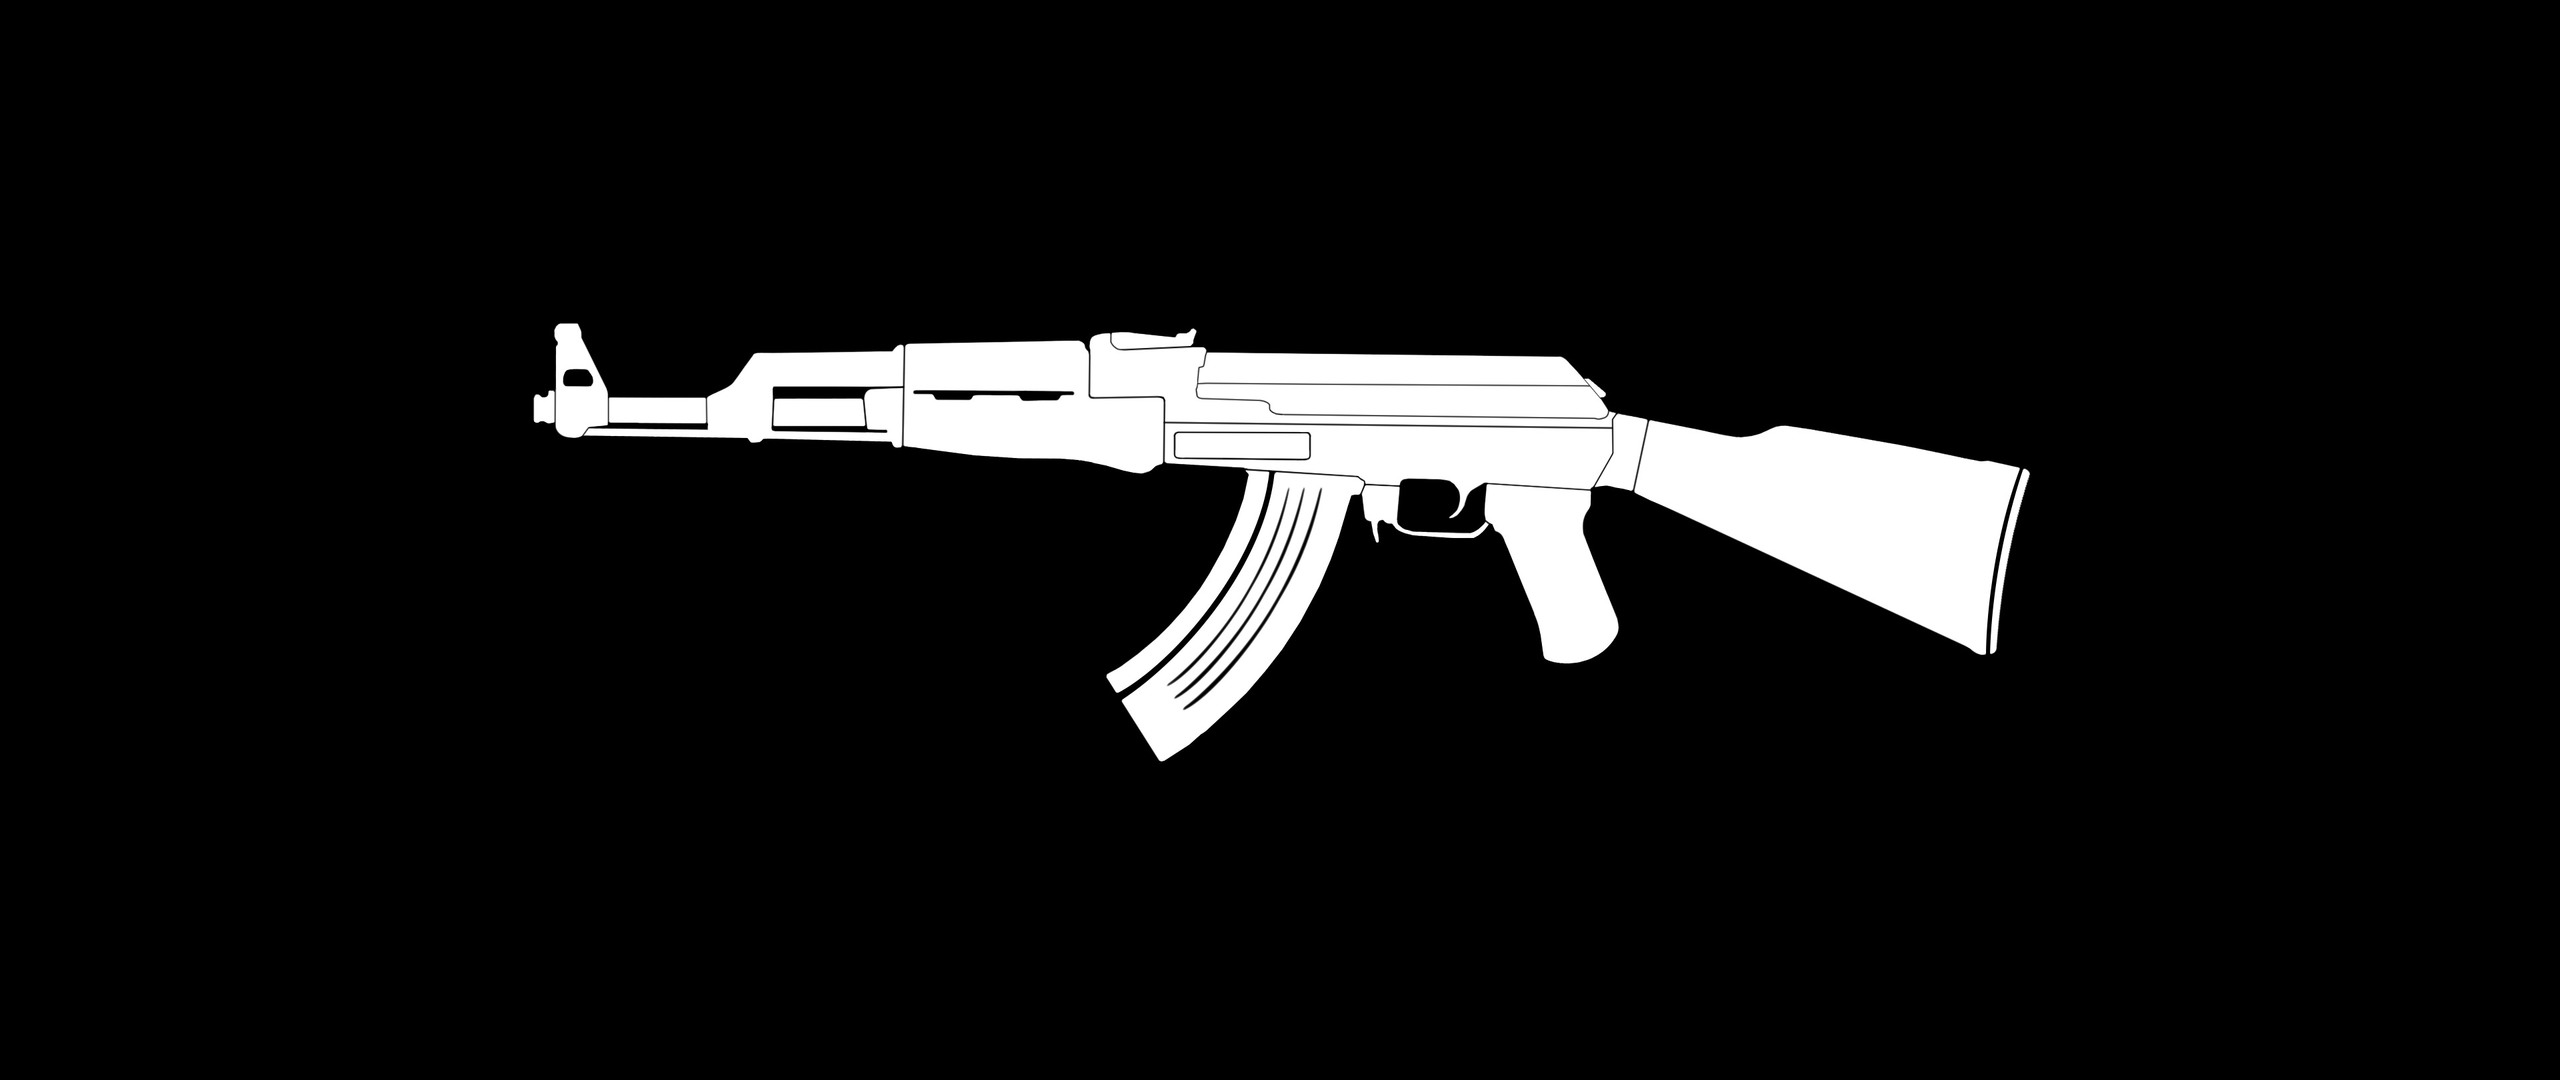 AK47 Gun Weapon Minimalism In 2560x1080 Resolution. ak47-gun-weapon-minimal...